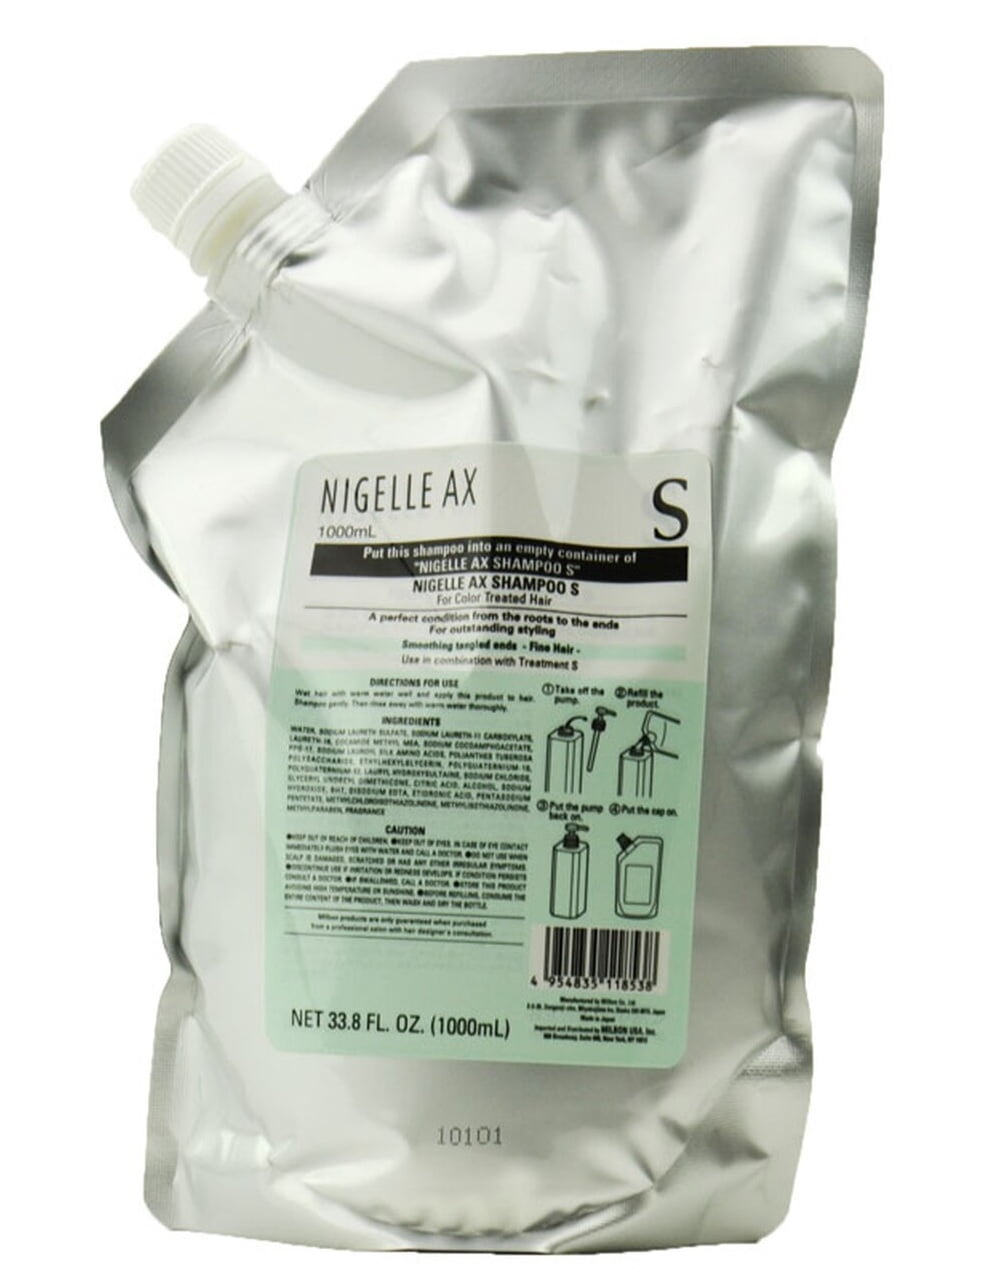 Milbon Nigelle AX Shampoo S  oz with refill bottle 